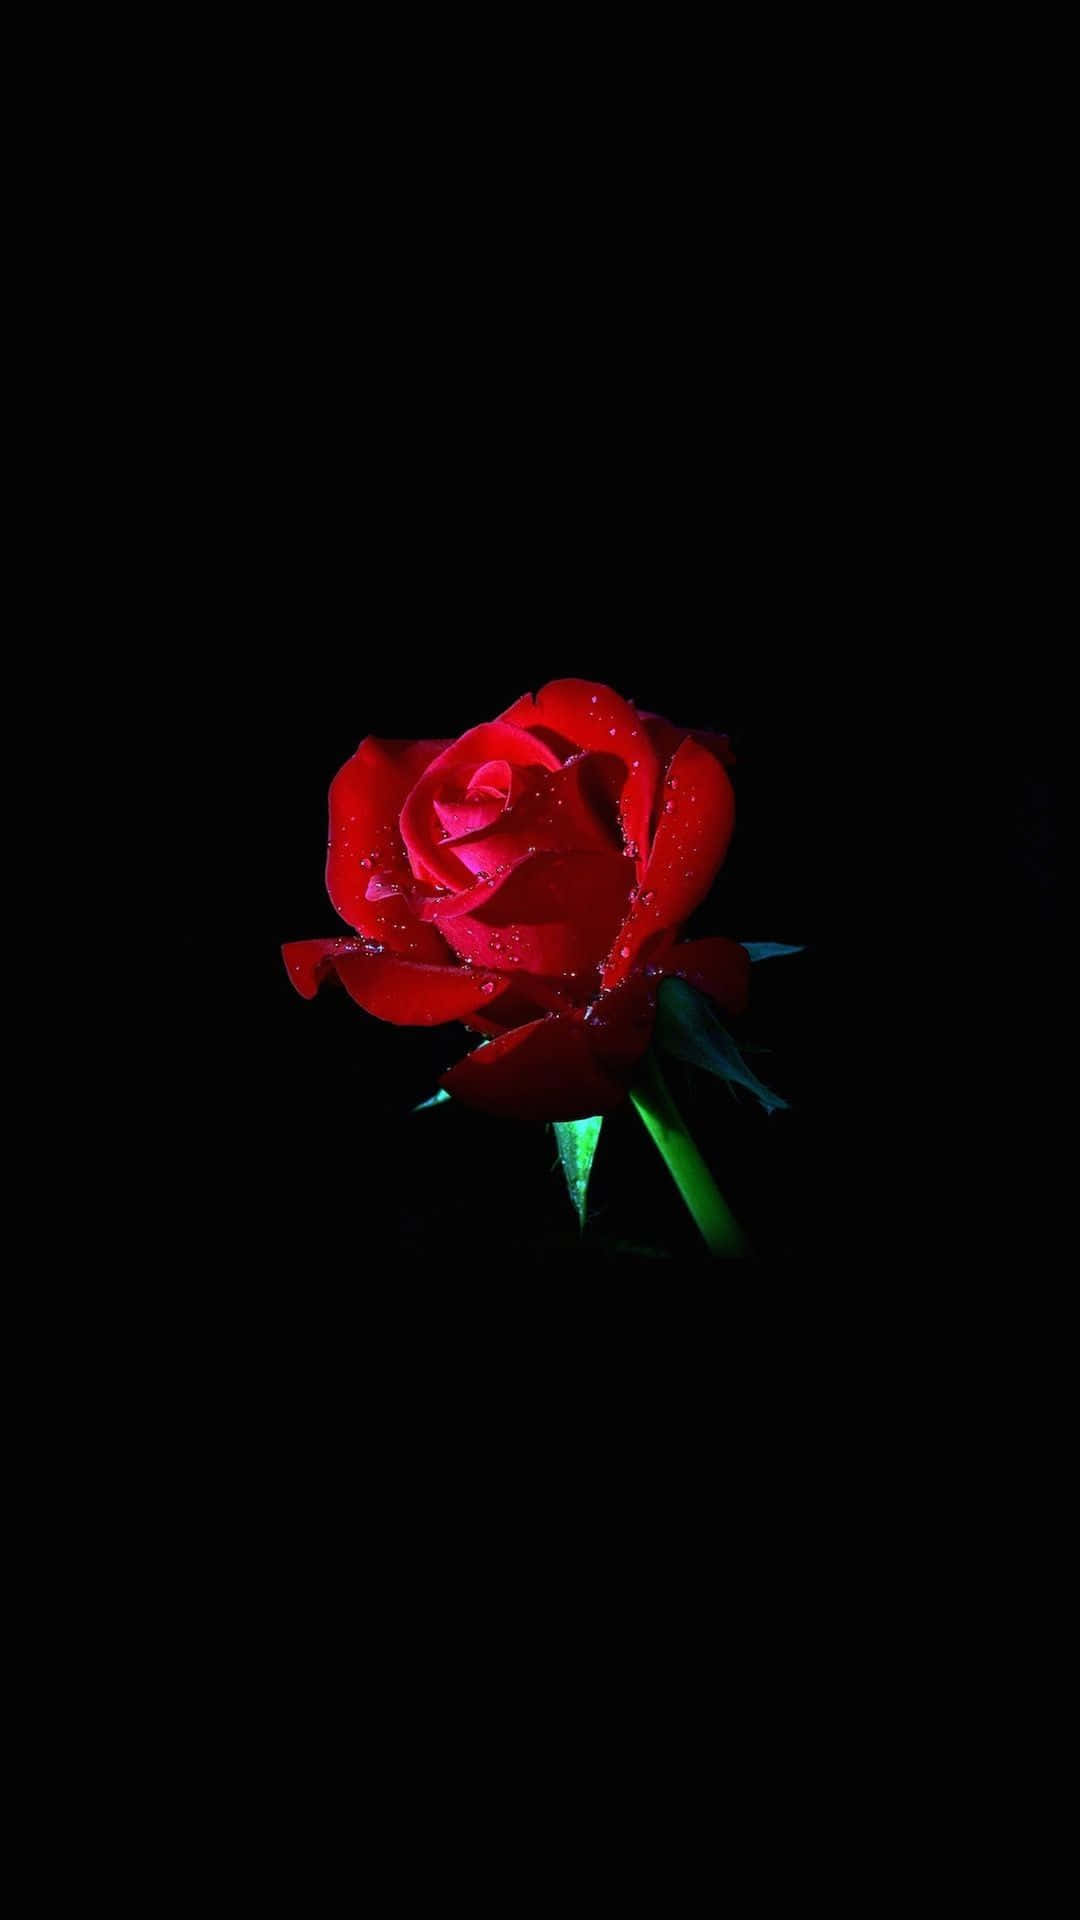 Imagenvibrante De Una Rosa Roja